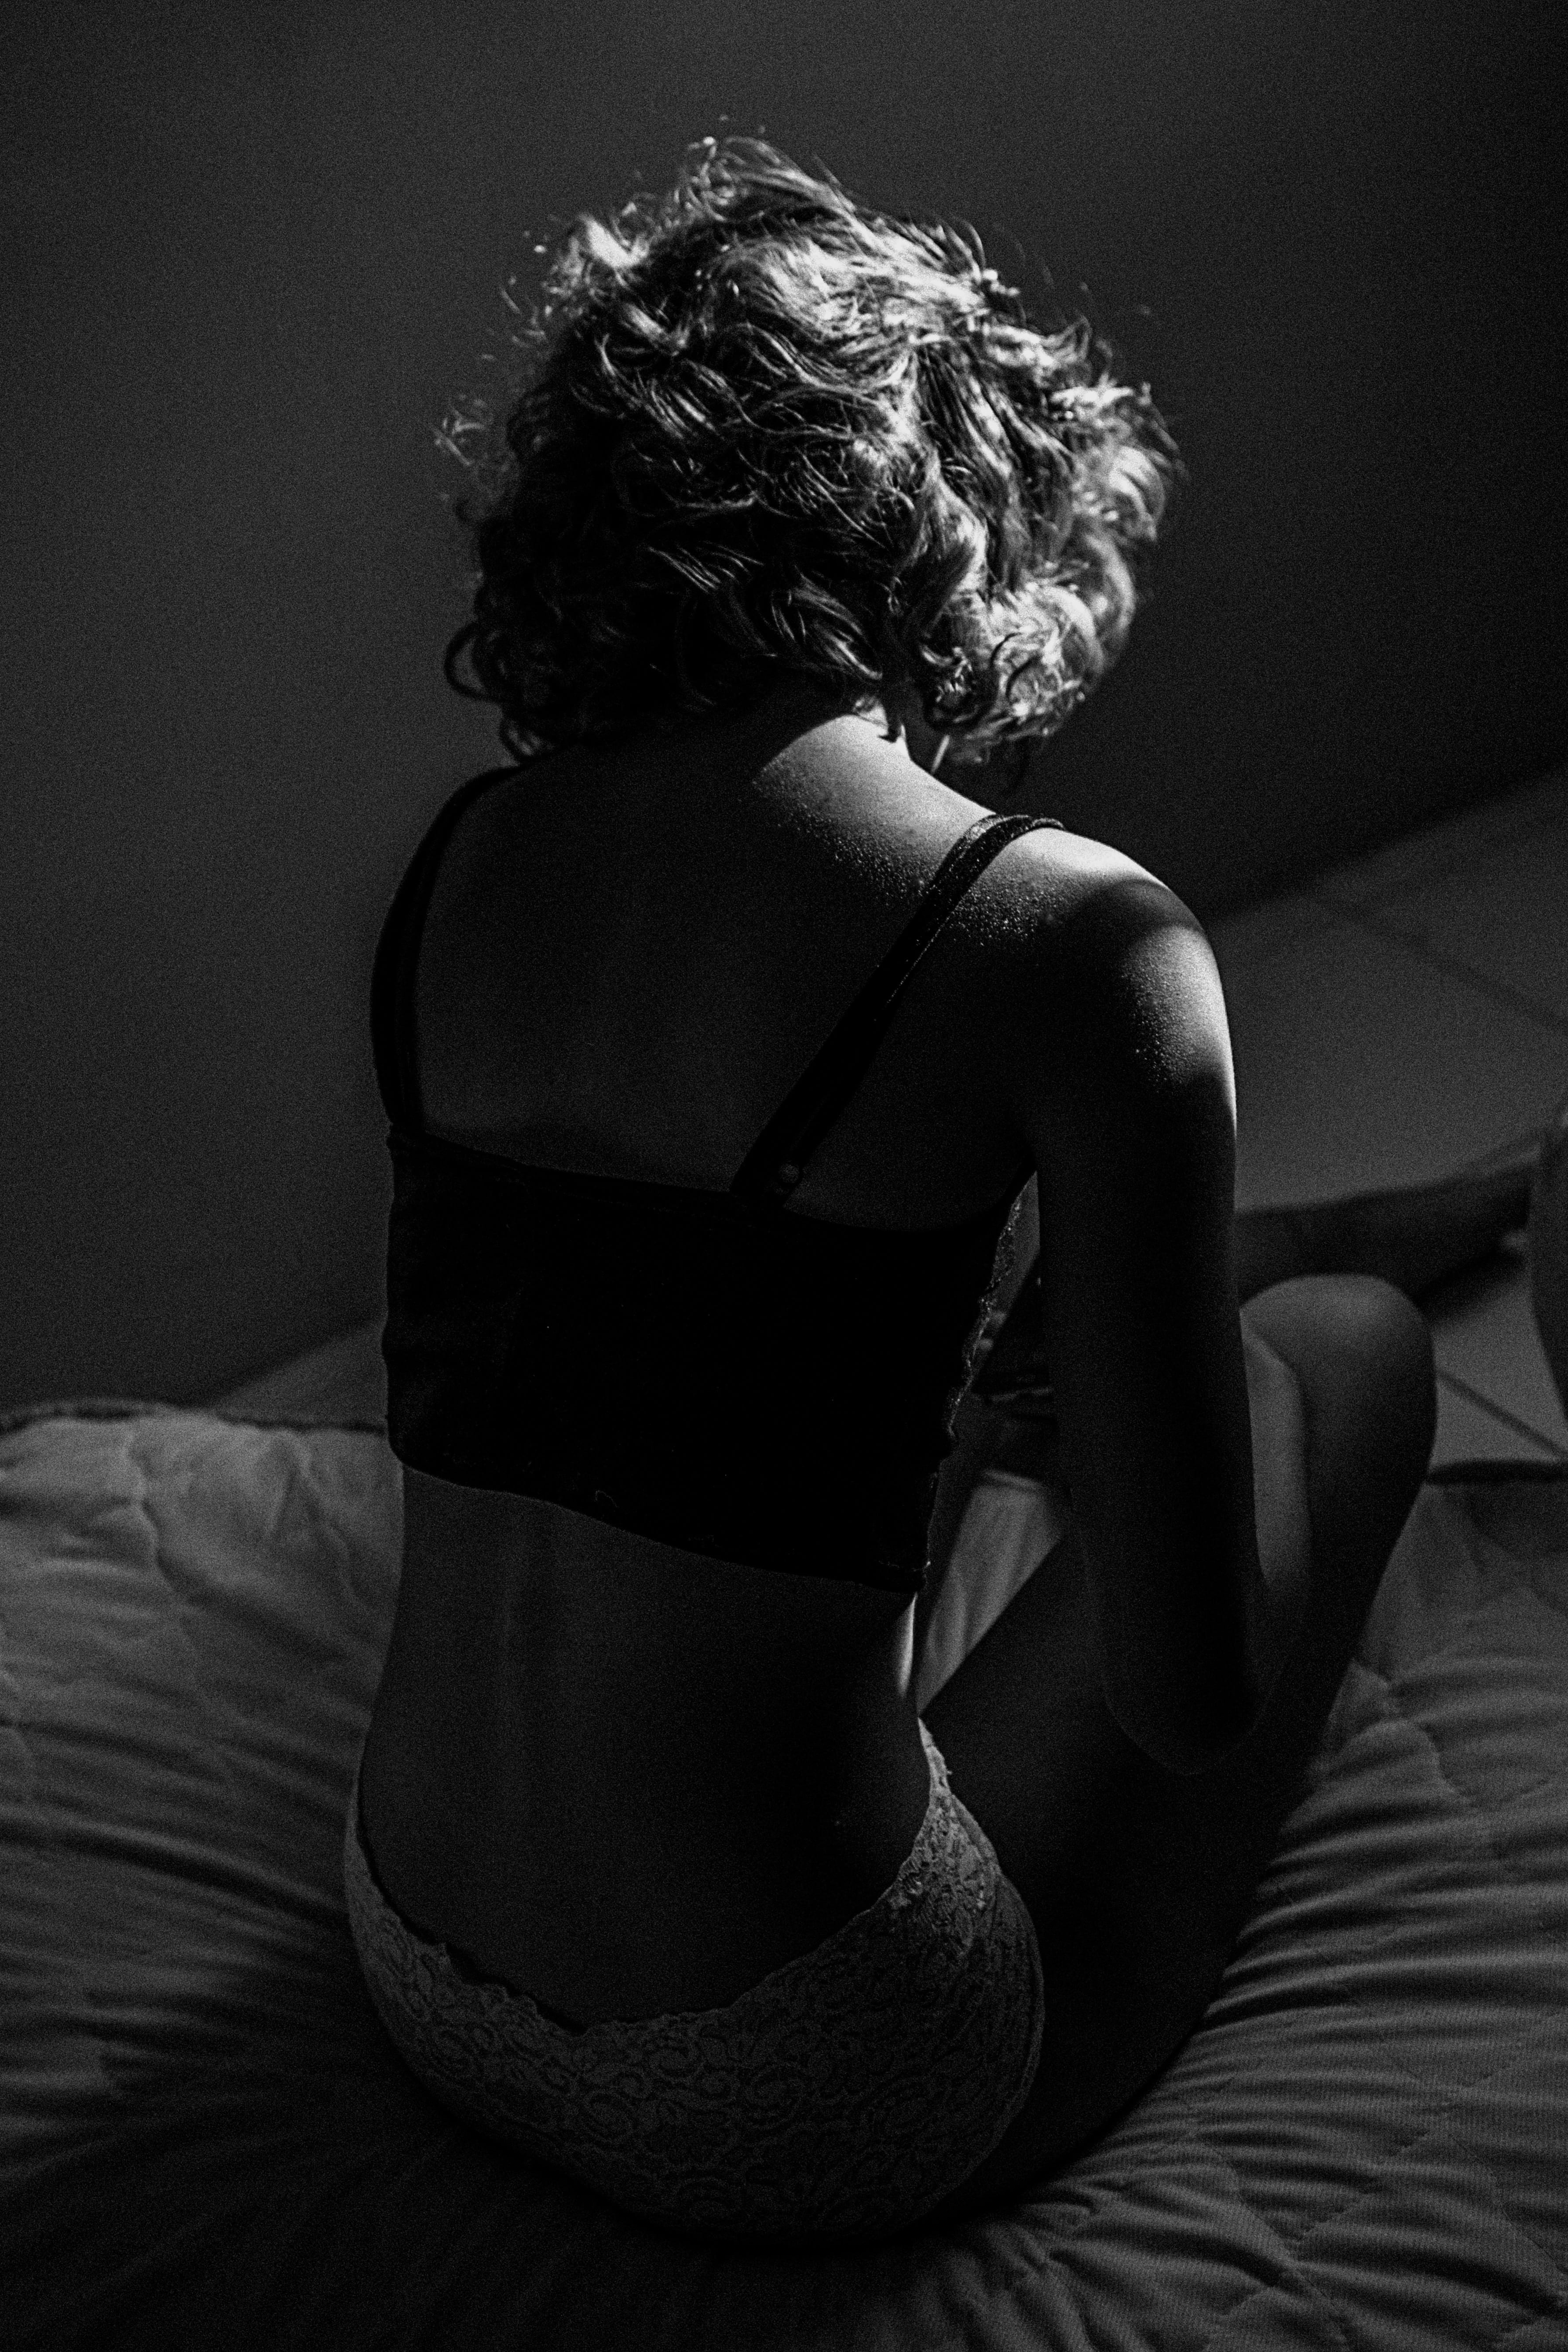 Gray scale photo of woman sitting on bed; image by Richard Jaimes, via Unsplash.com.